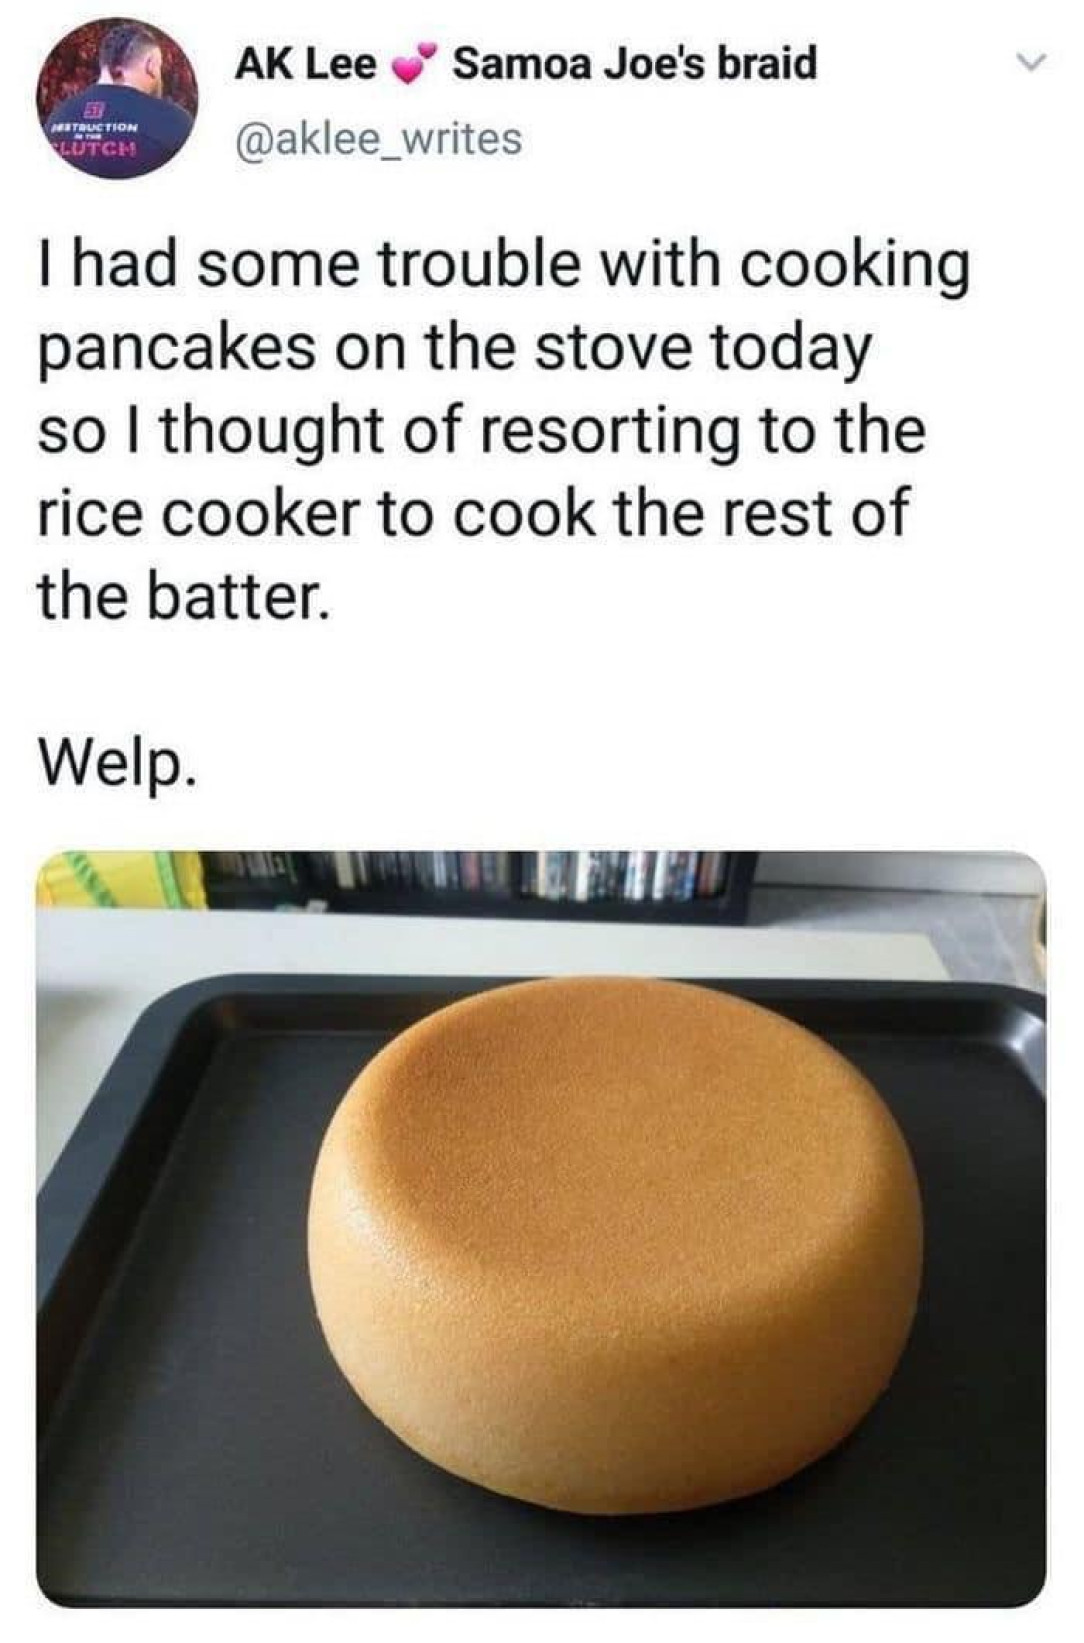 This fluffy pancake